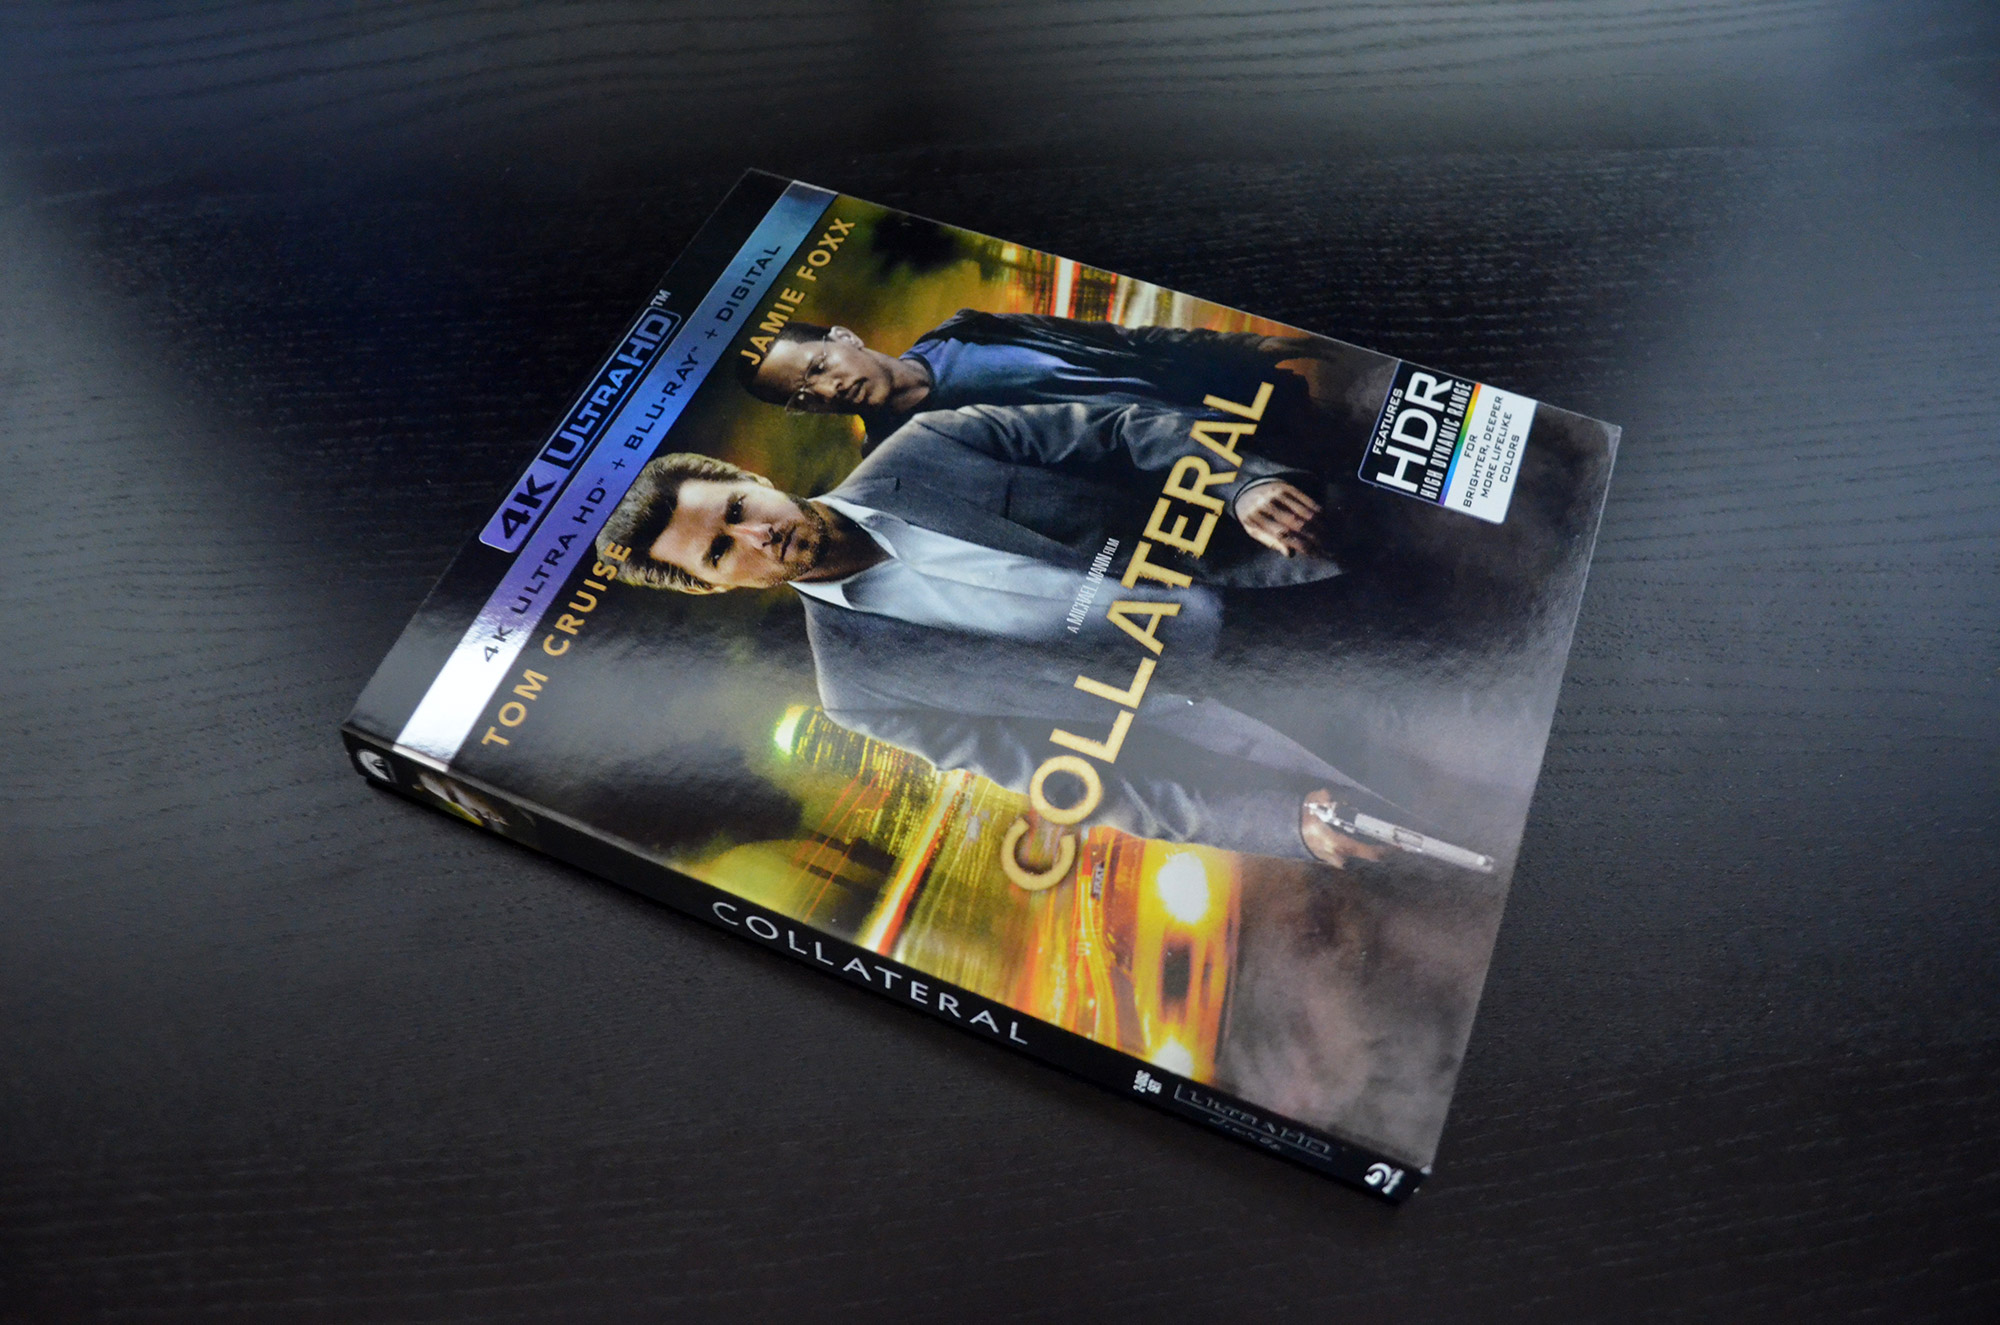 Collateral (4K UHD + Blu-ray + Digital)